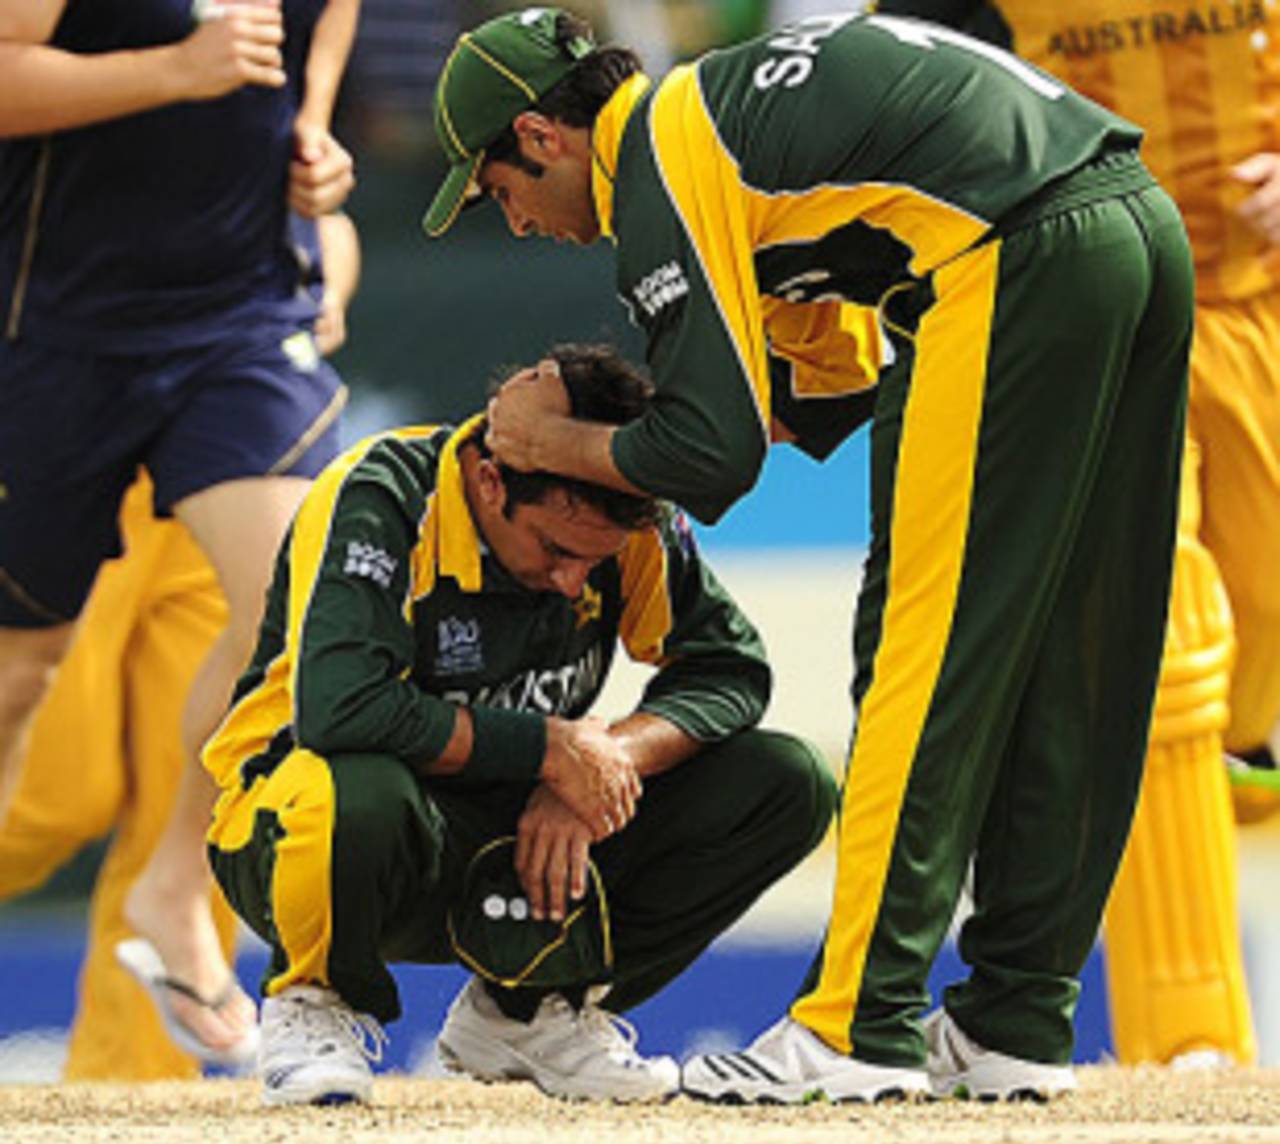 Salman Butt consoles Saeed Ajmal after Pakistan's shock defeat, Australia v Pakistan, 2nd semi-final, ICC World Twenty20, St Lucia, May 14, 2010